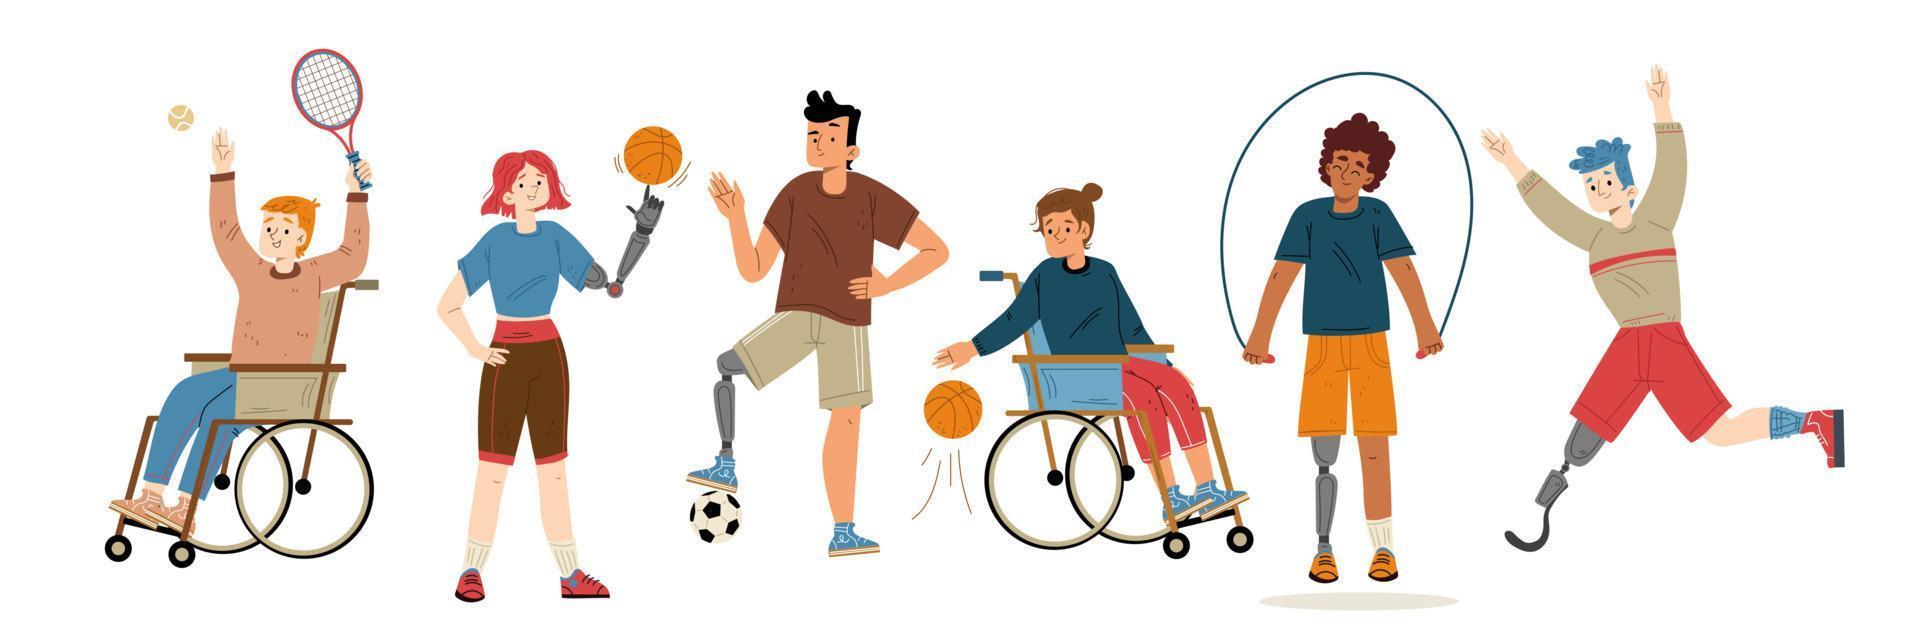 deporte atleta personas con diferentes discapacidades vector